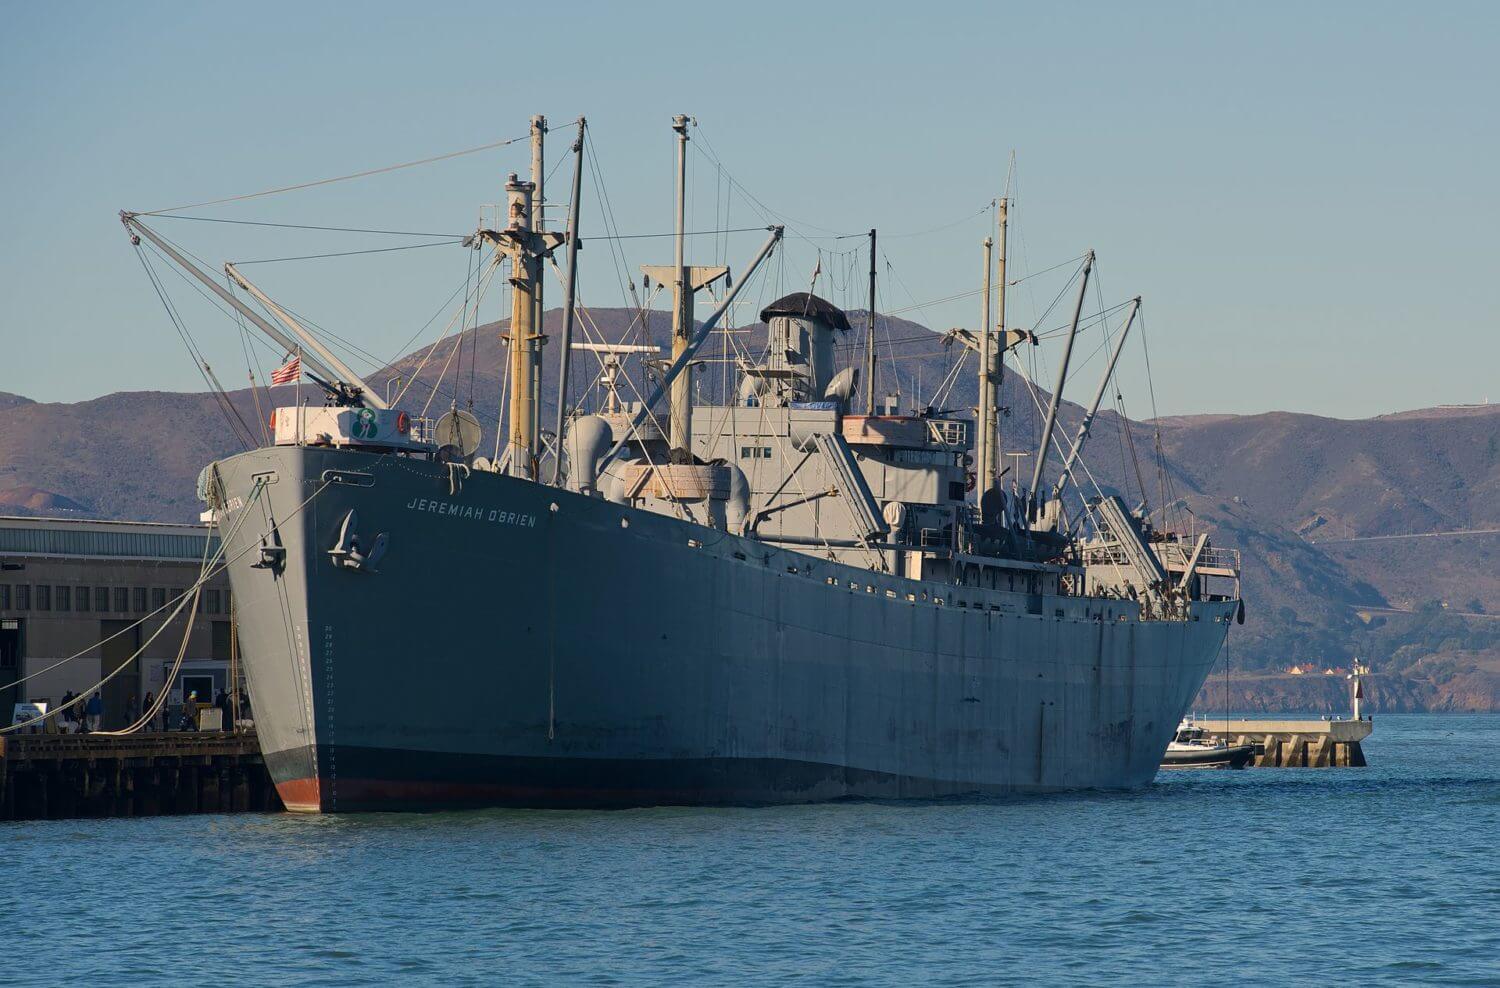 USS Jeremiah O'Brien San Francisco - Wikimedia Commons photo by kevinmcgill